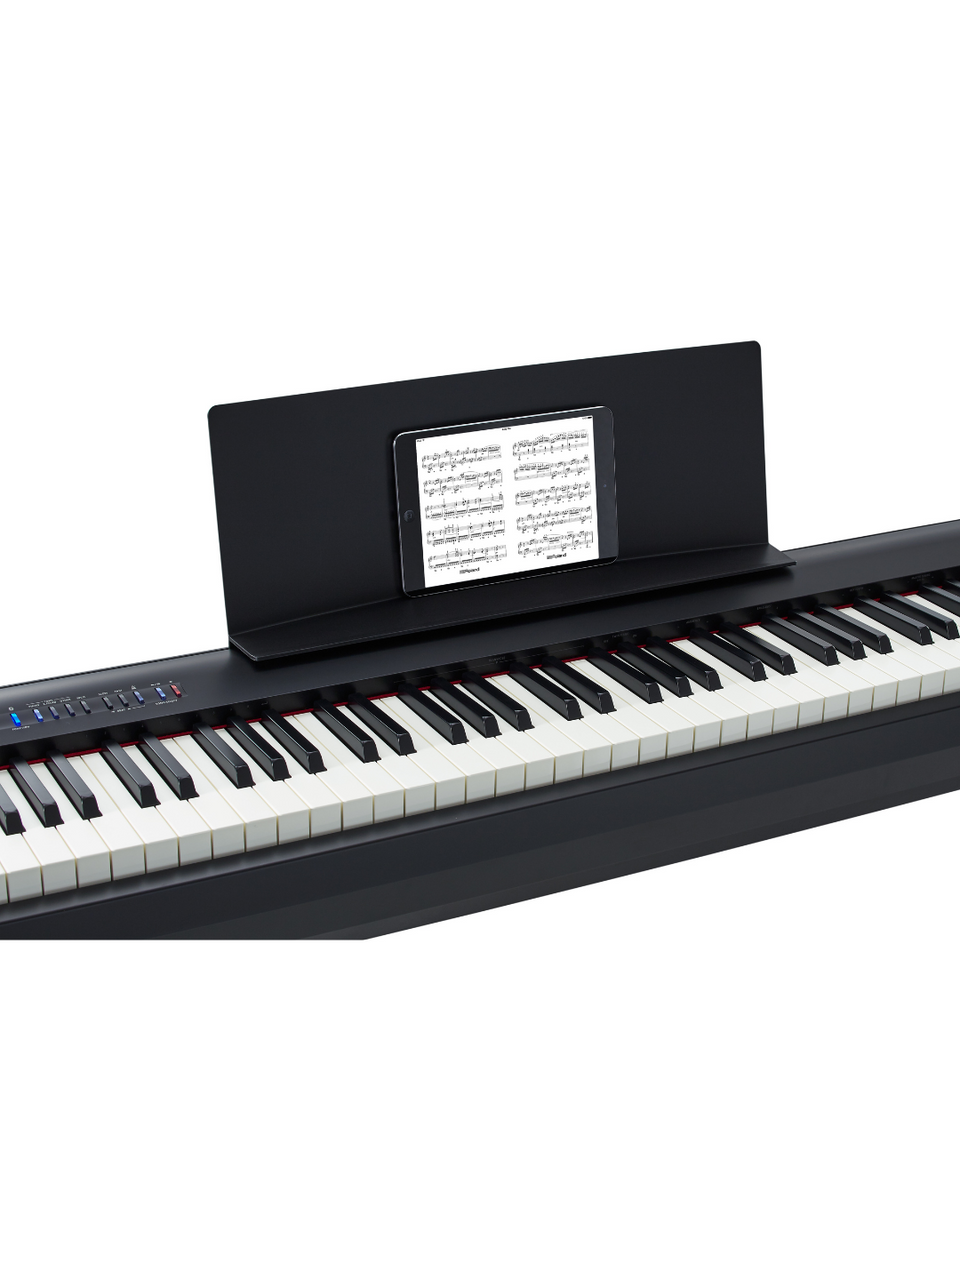 Roland FP-30X Digital Piano - Black